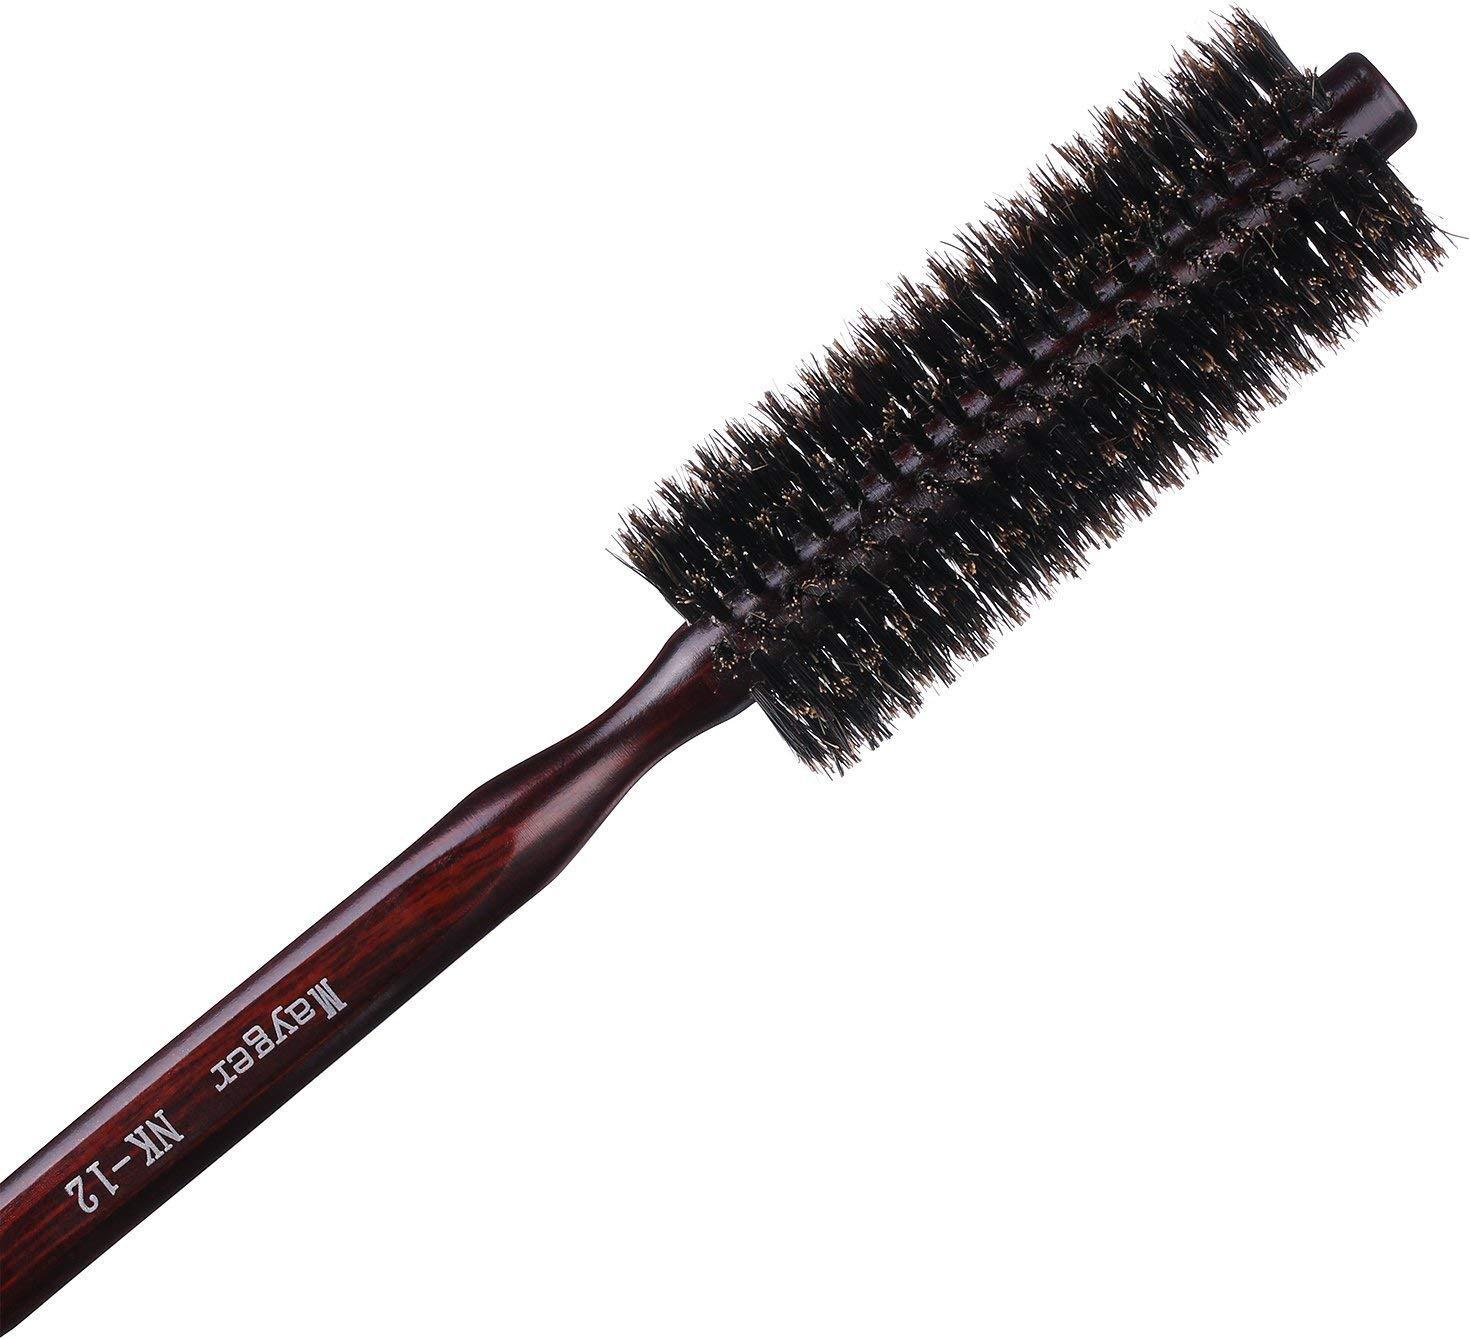 Perfehair Small Round Hair Brush: Ideal for Thin or Short Hair